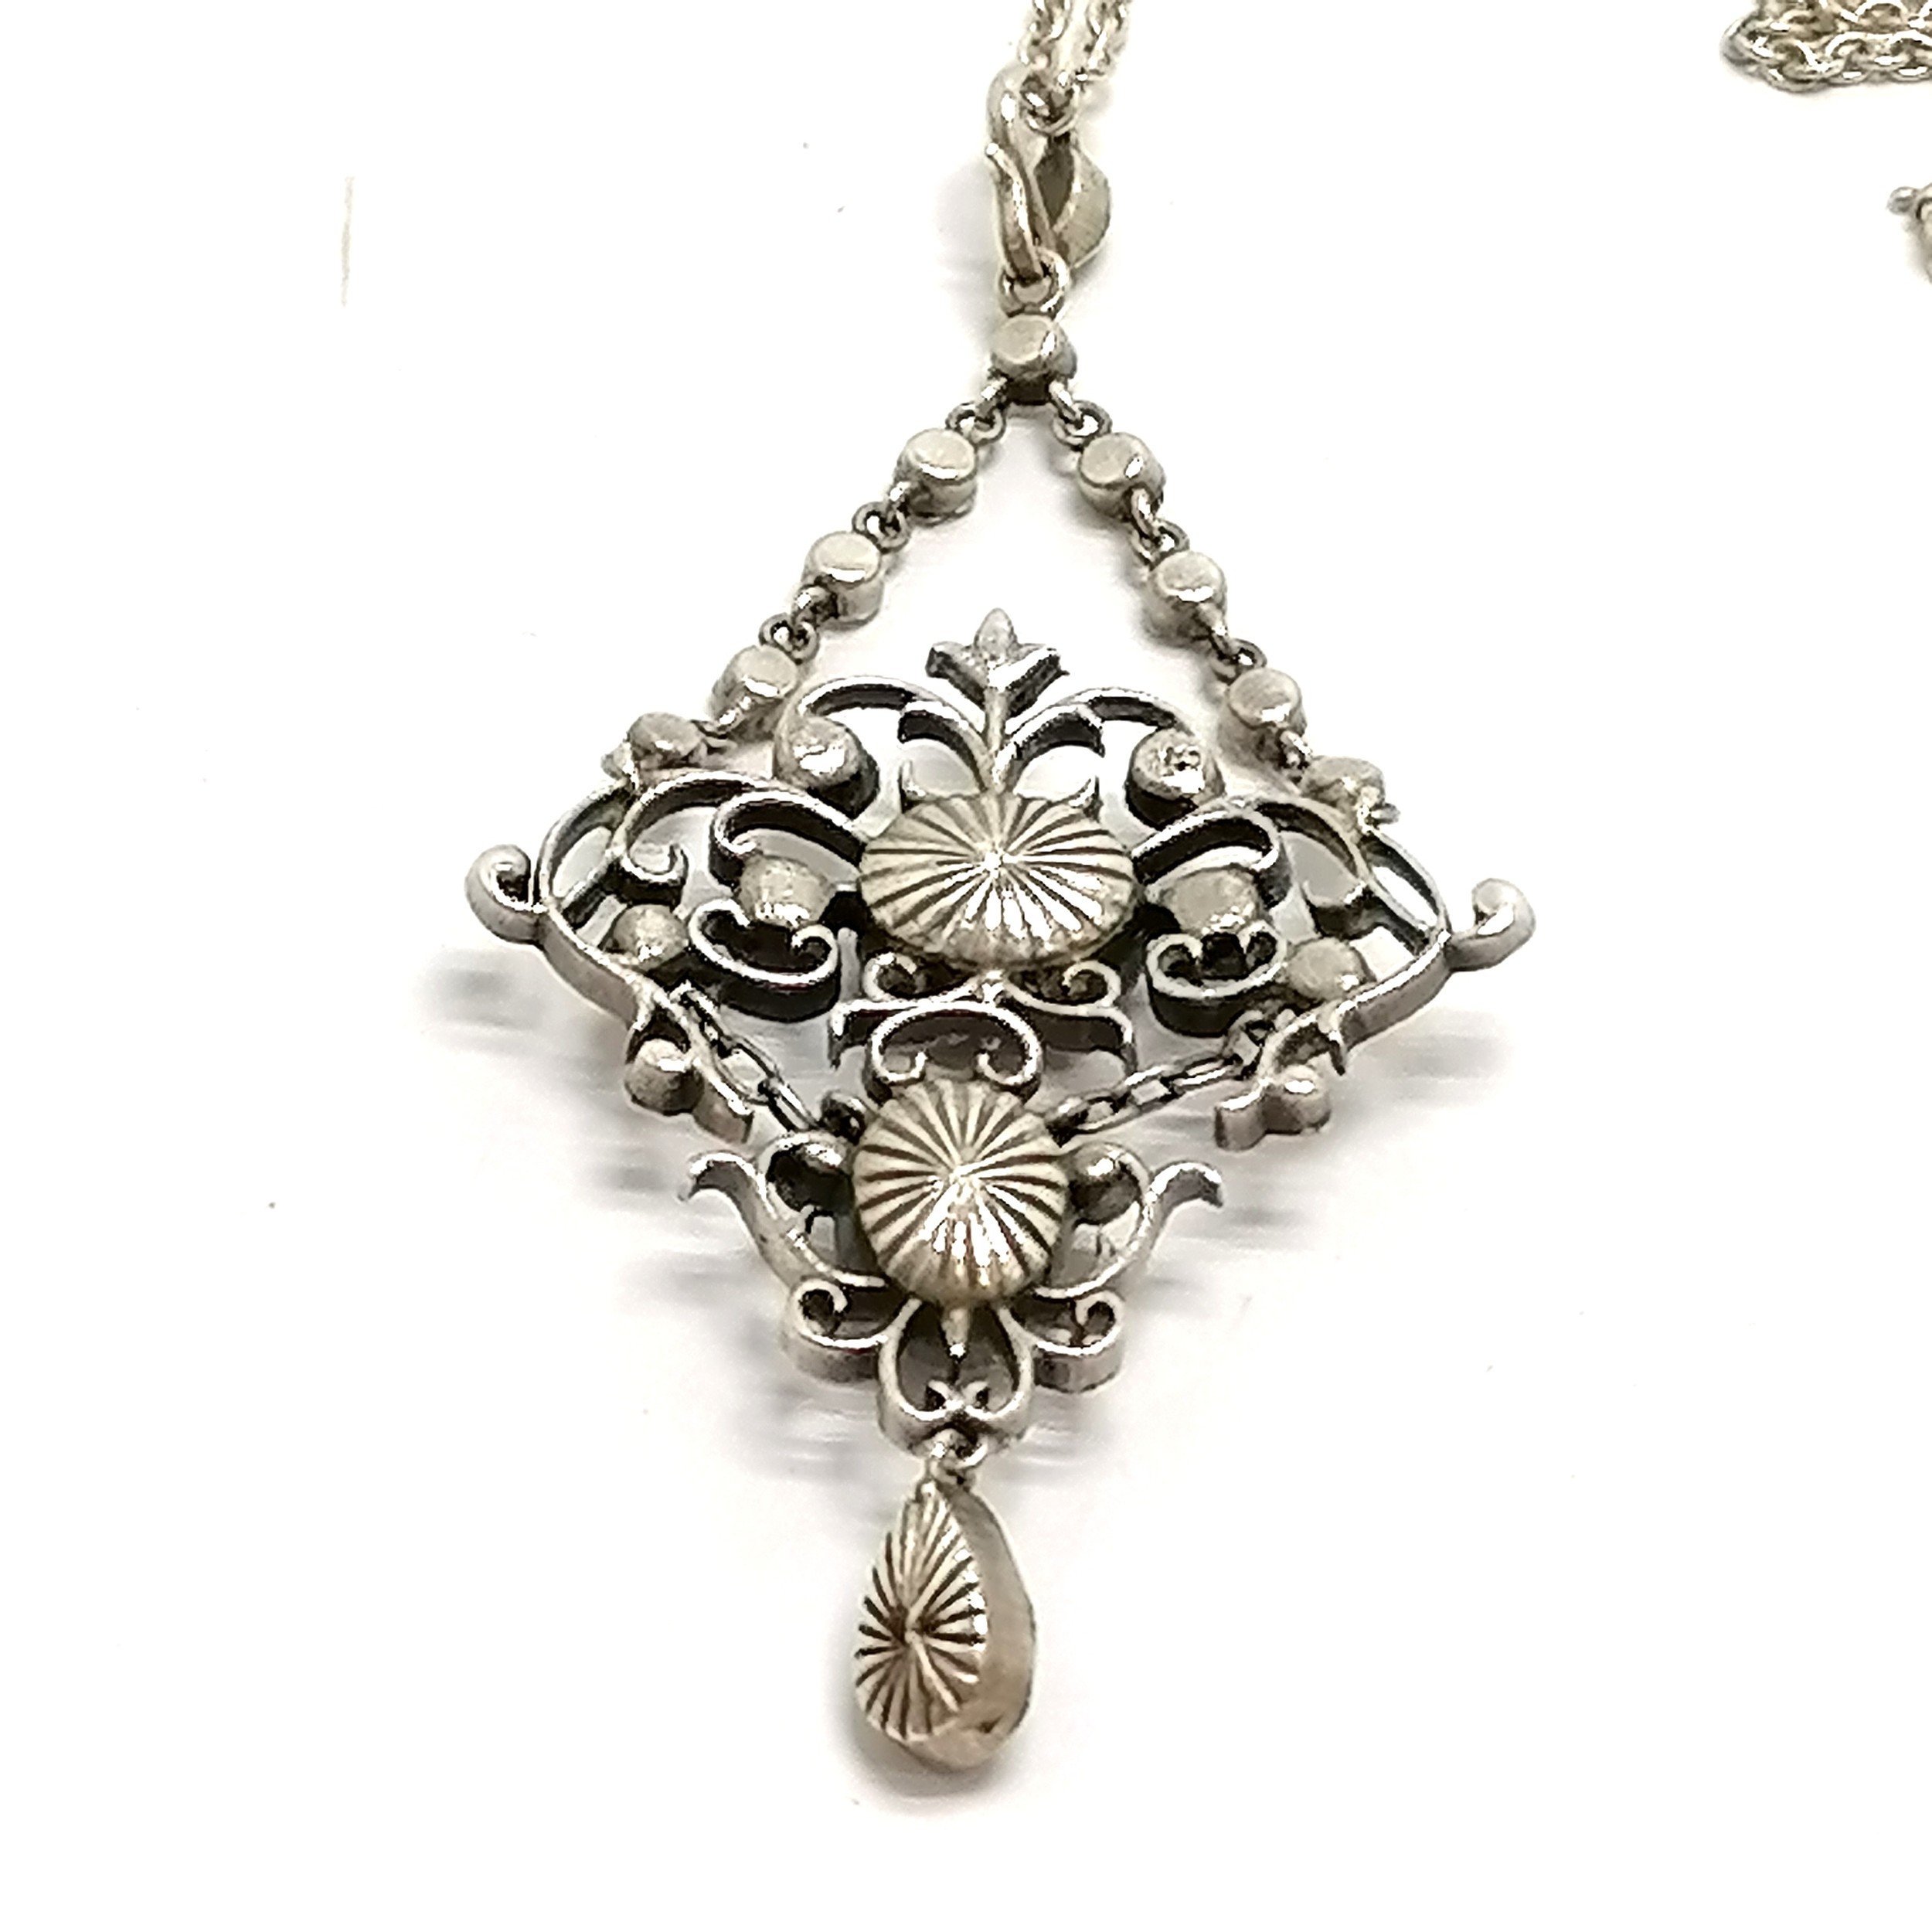 Antique unmarked silver paste purple + white stone set pendant (6.5cm drop) on a silver 60cm chain - - Image 2 of 3